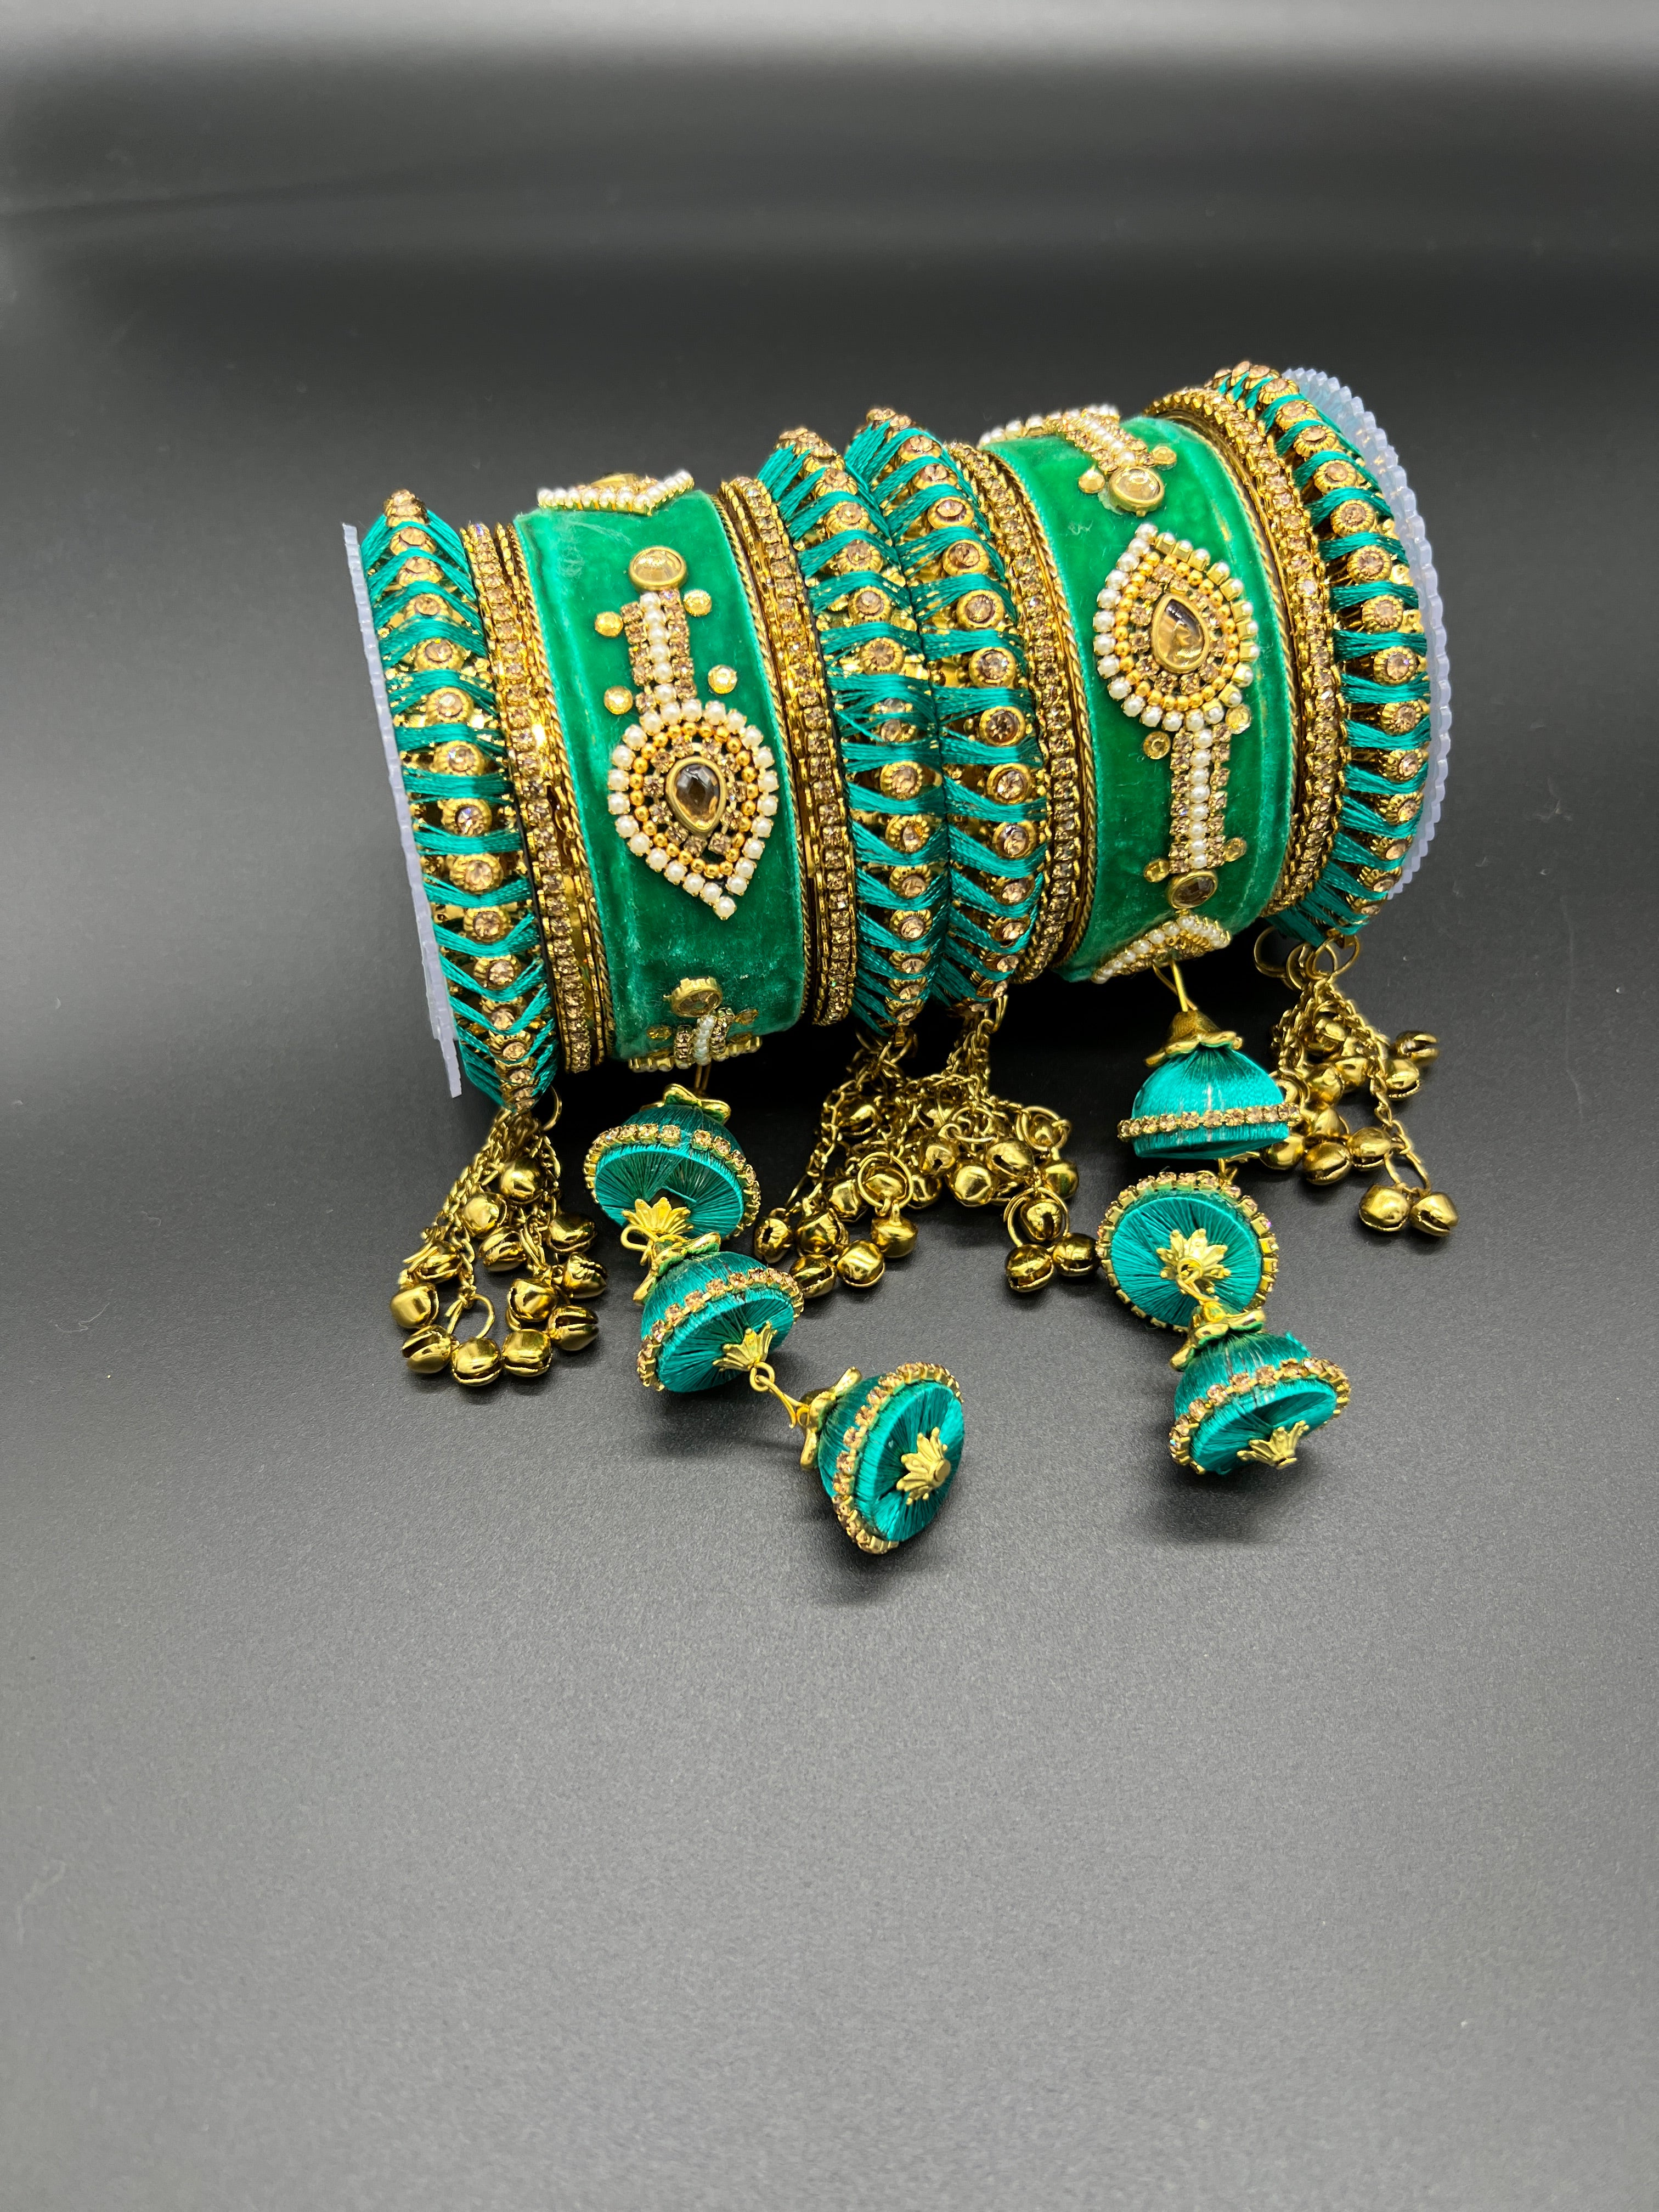 Teal Green Thread and Gold Stone Work Bangles - Desi Posh